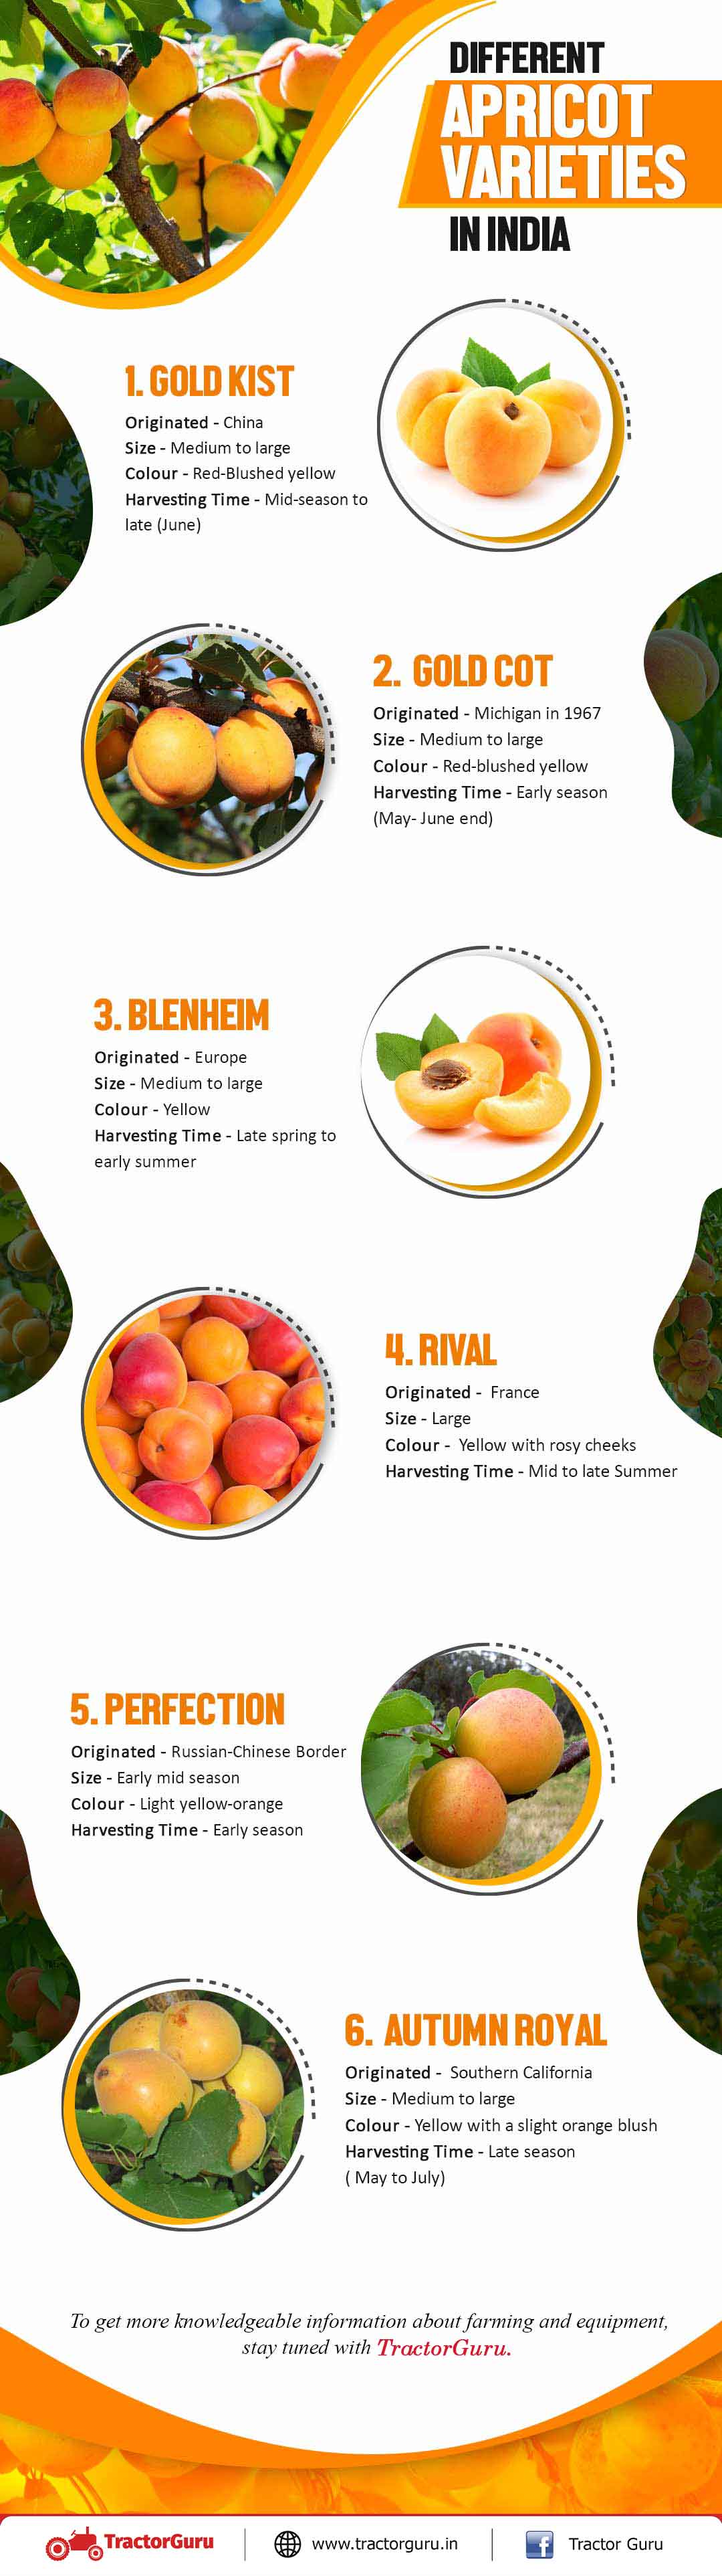 Apricot Farming in India